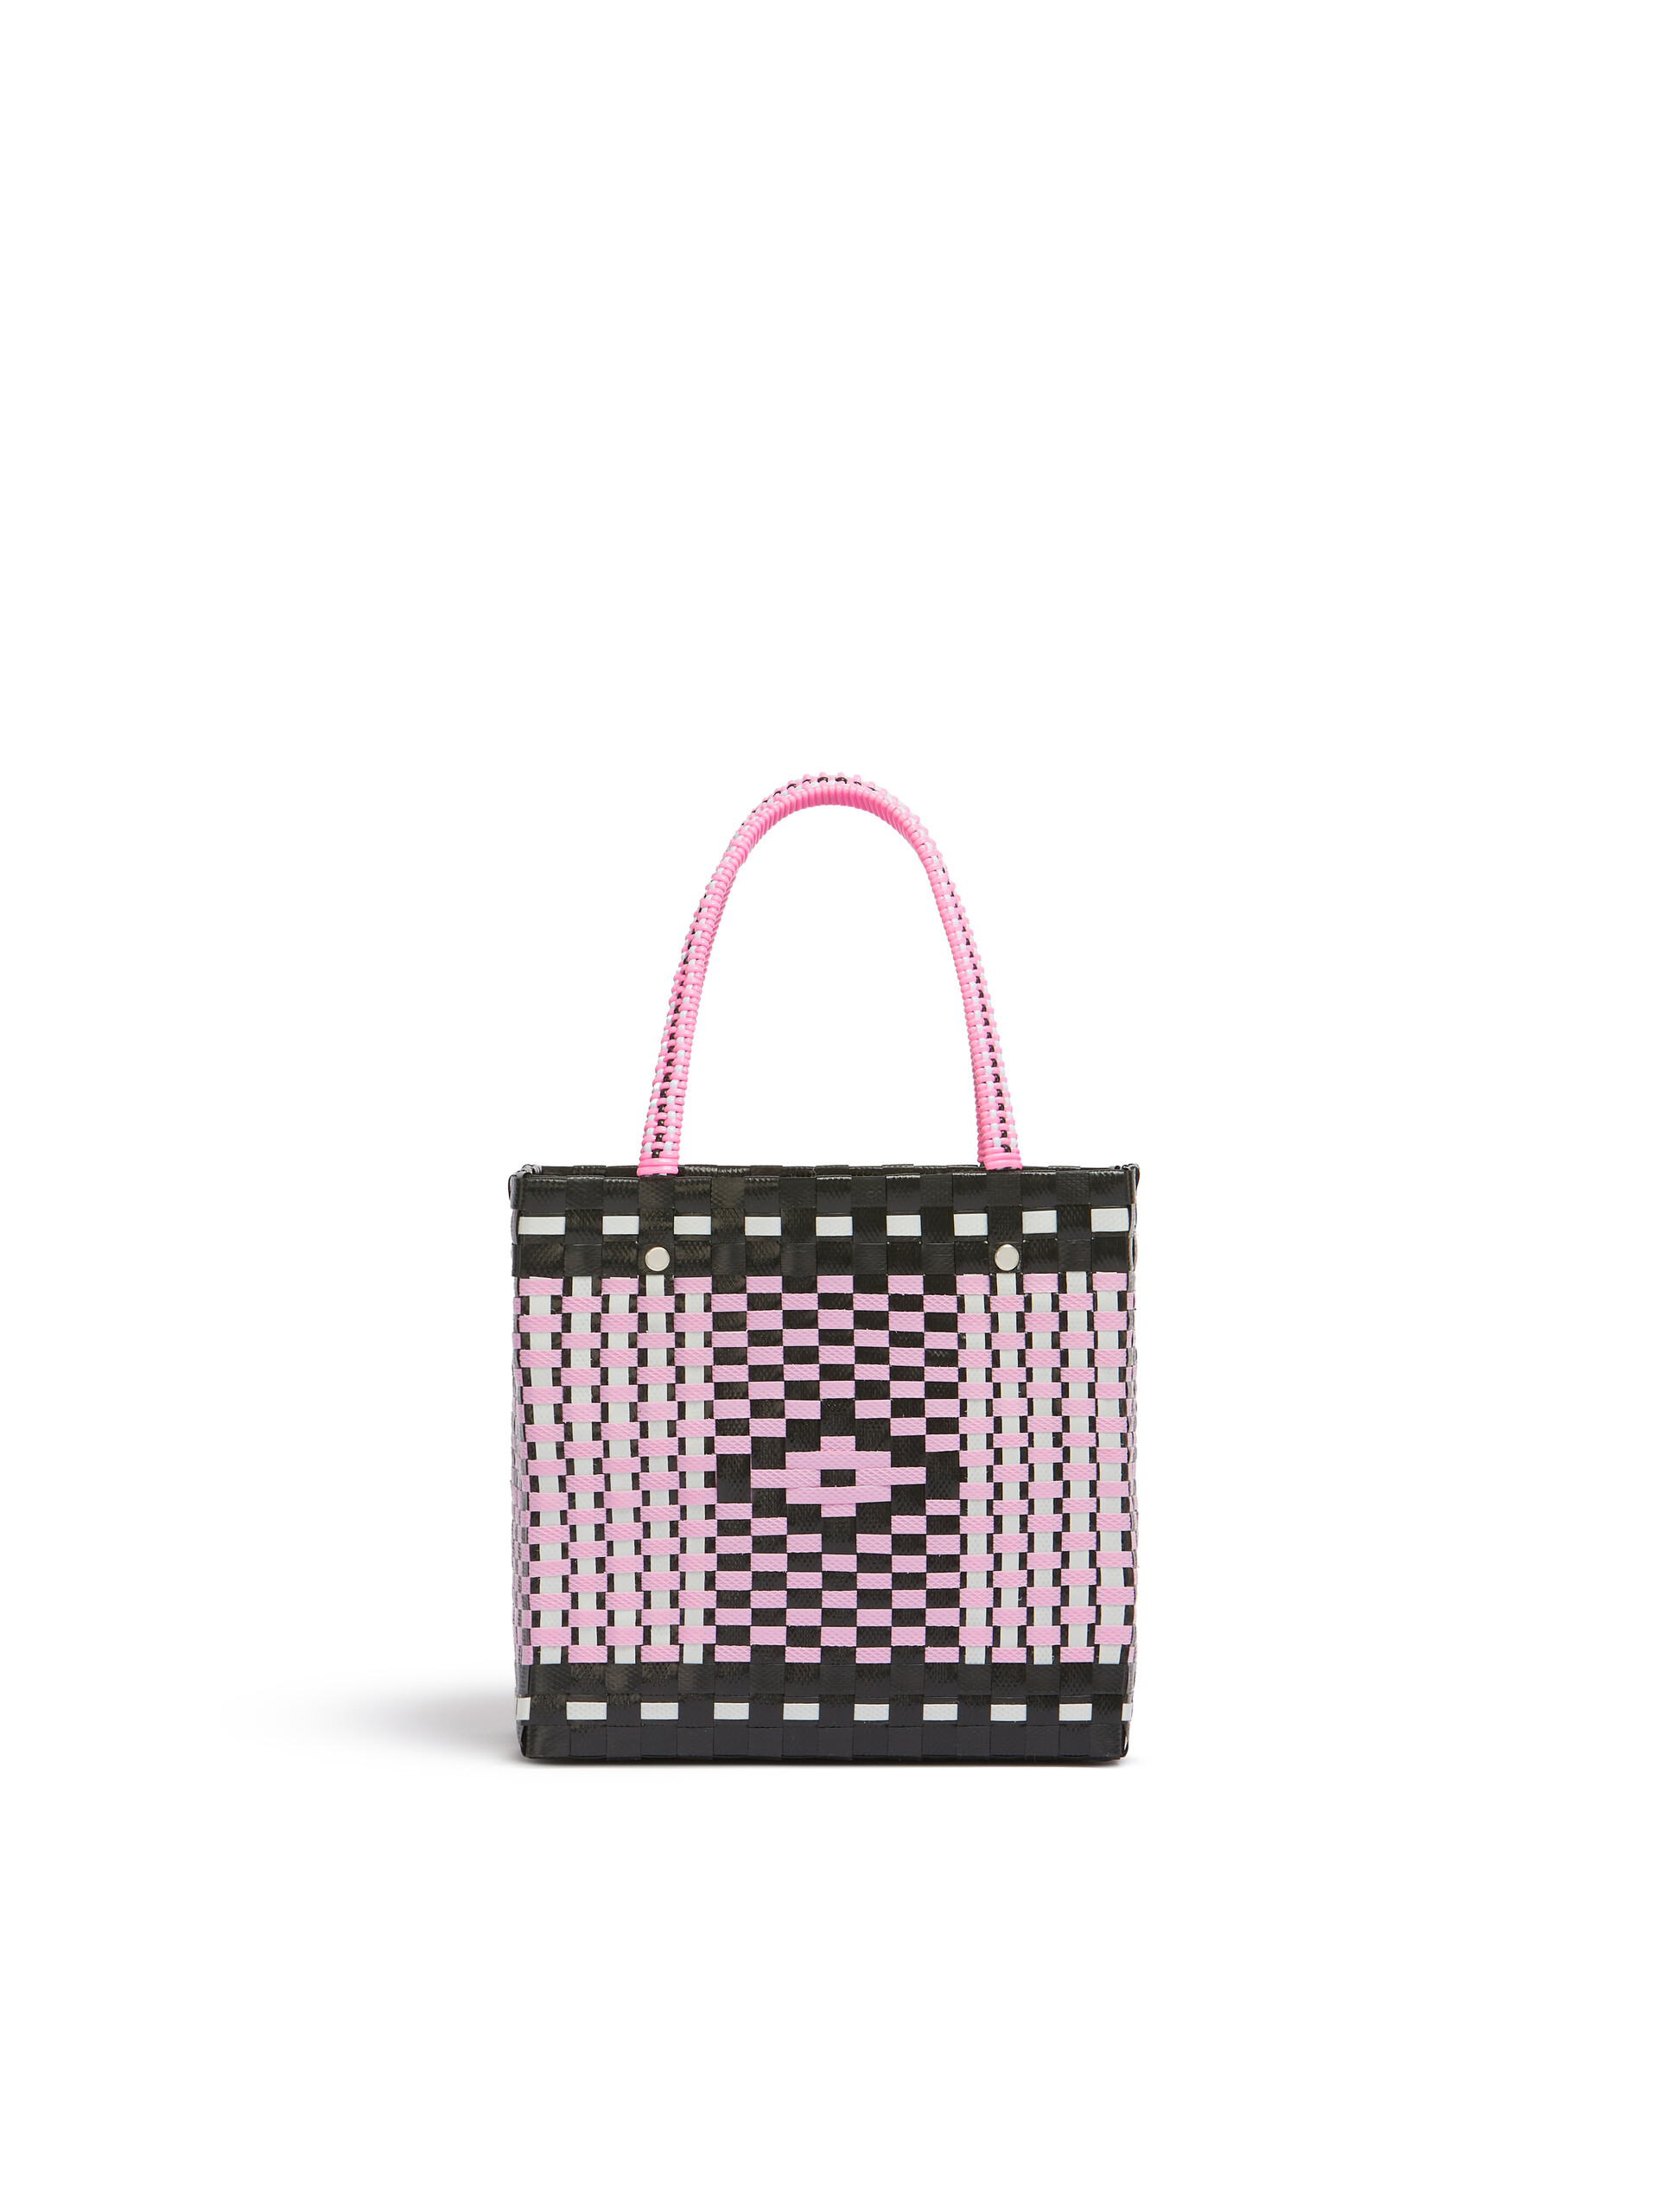 MARNI MARKET 핑크 다이아몬드 미니 바스켓 백 - 쇼핑백 - Image 3